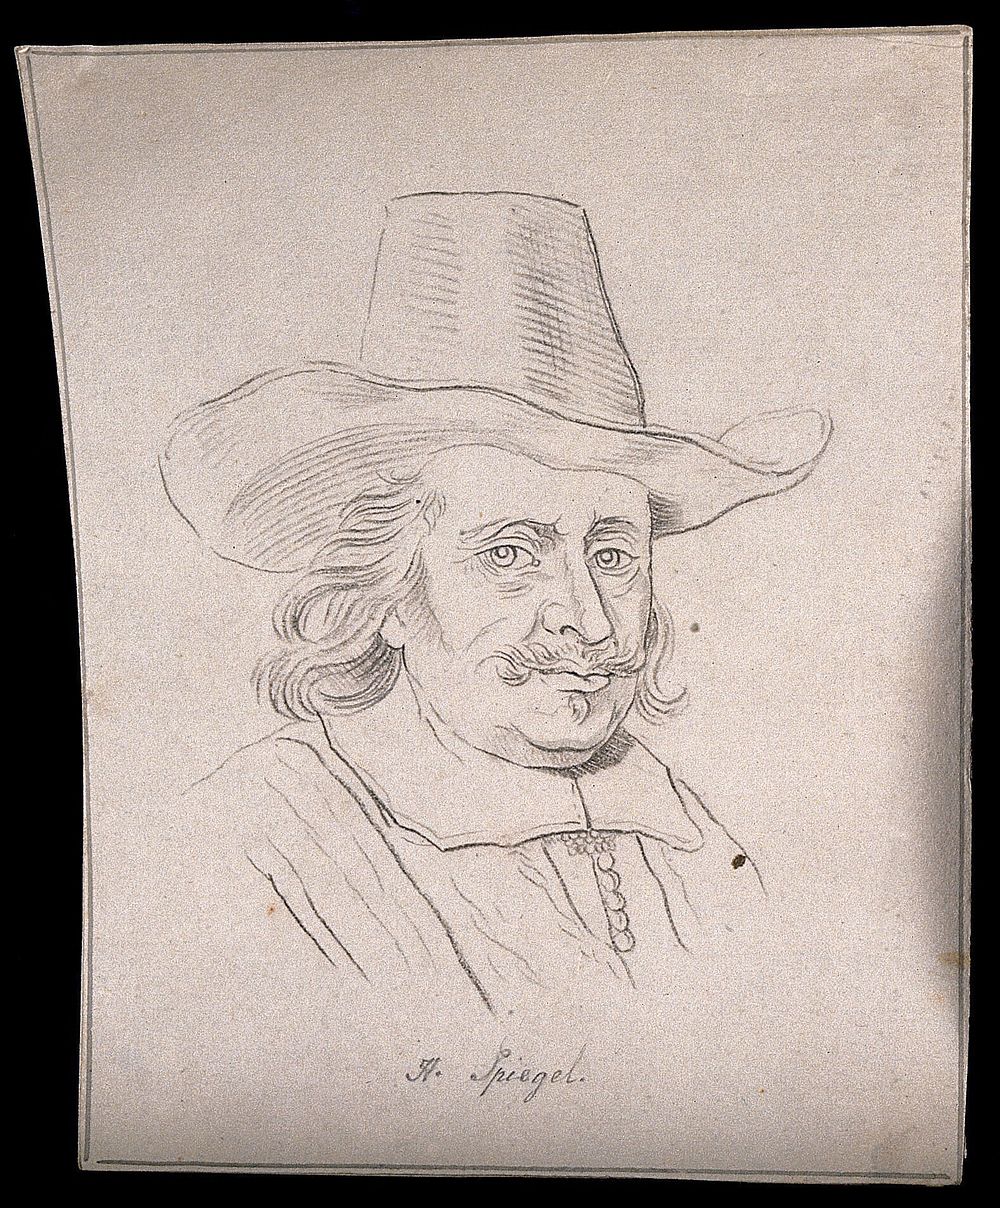 H. Spiegel: portrait. Drawing, c. 1793.